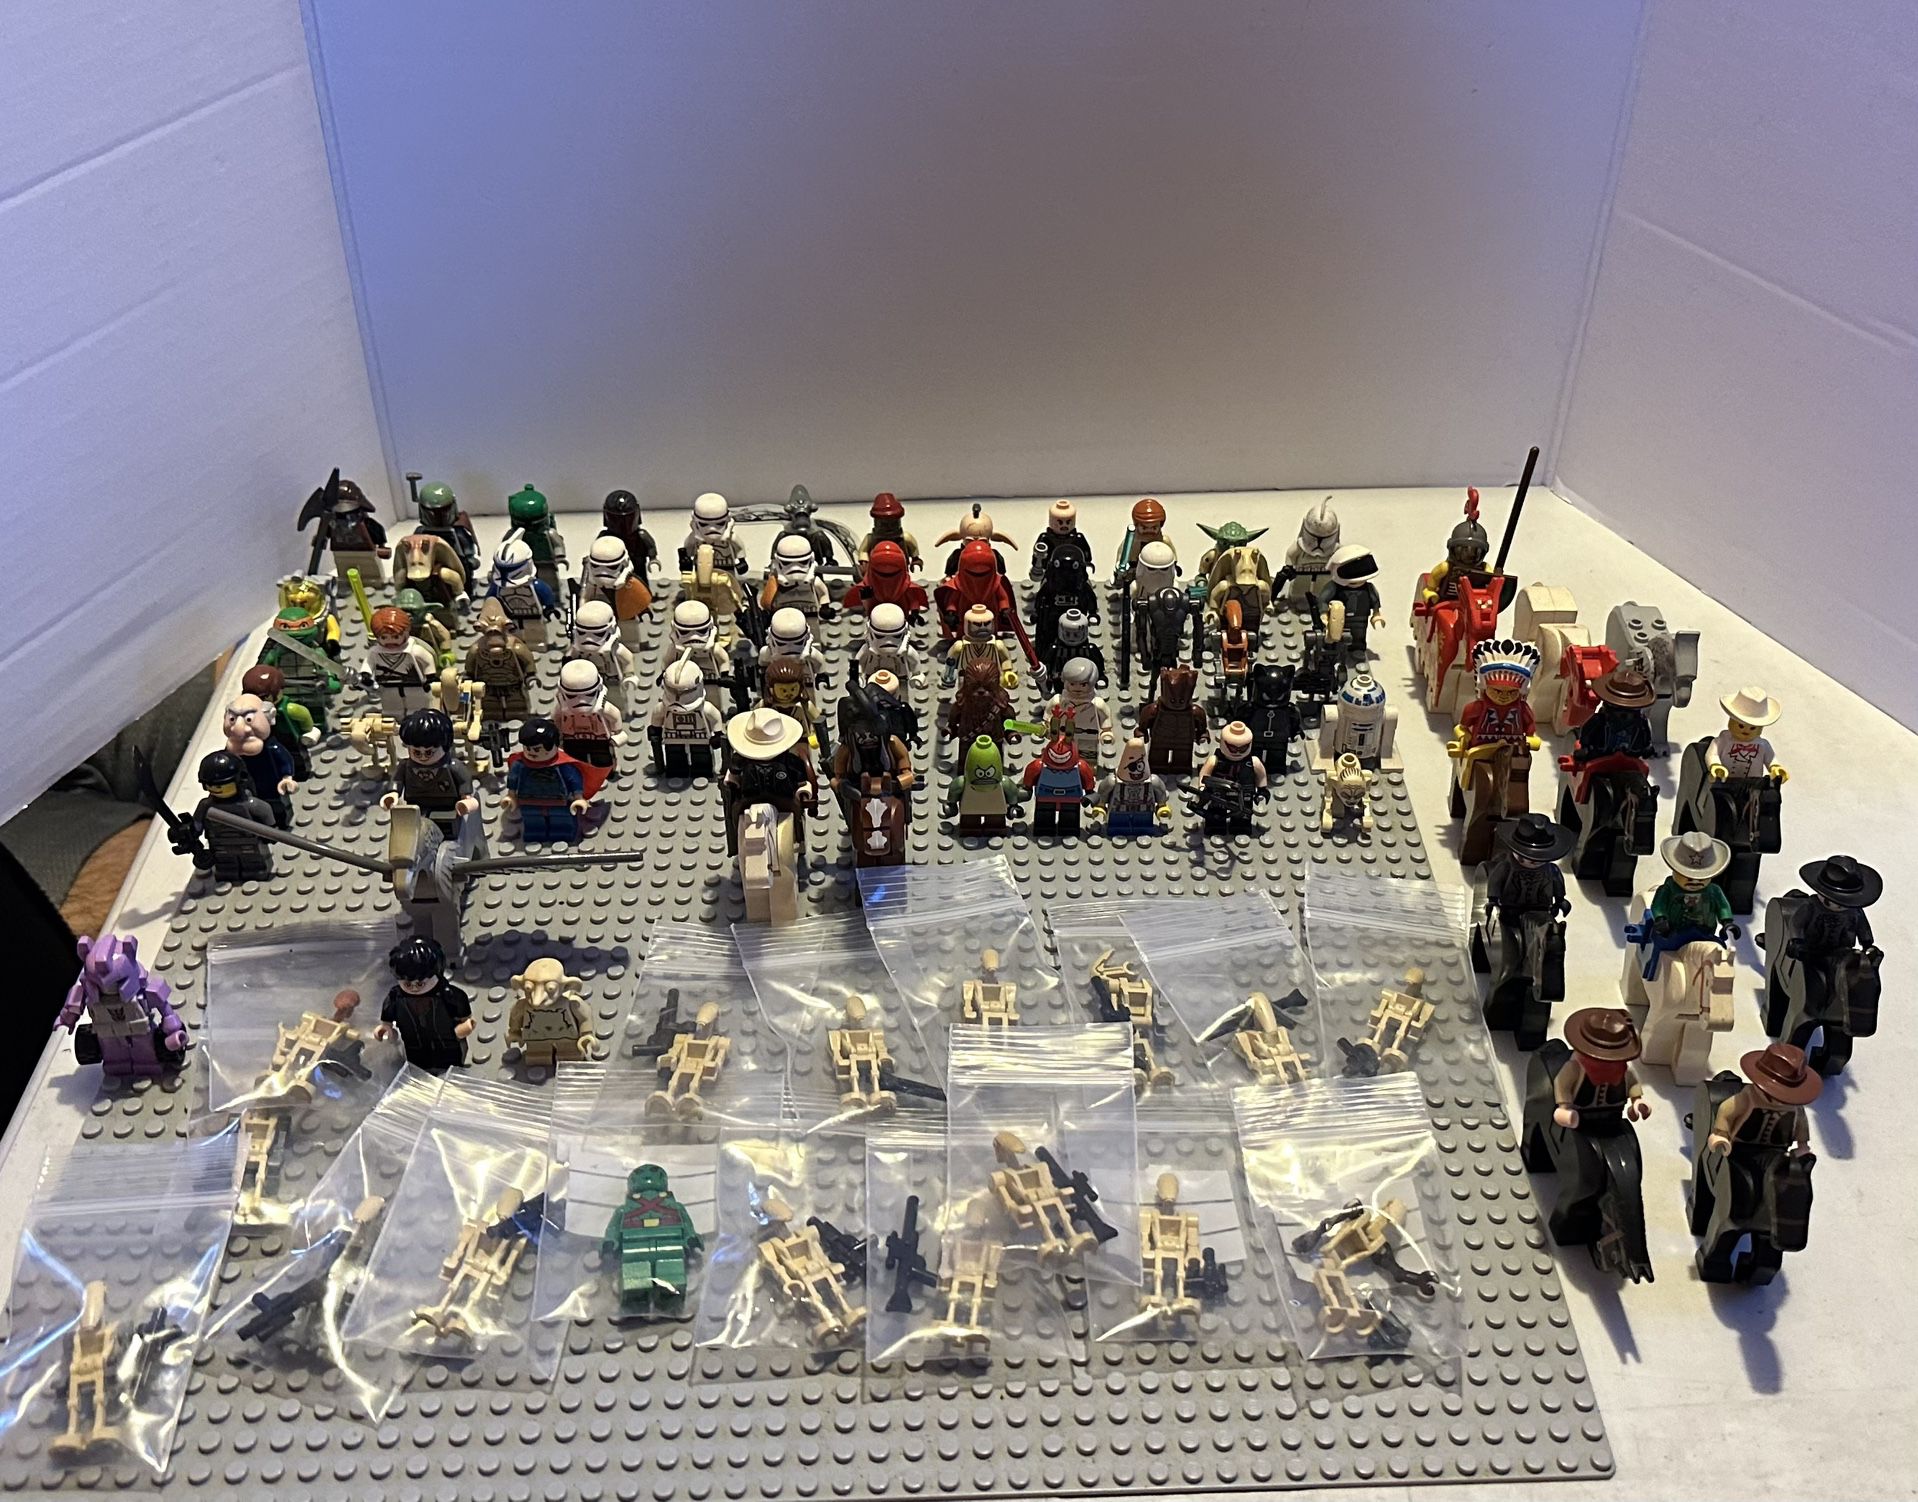 BIG LOT OF LEGO MINI FIGURES (Star Wars, Harry Potter, Lone Ranger) 100 